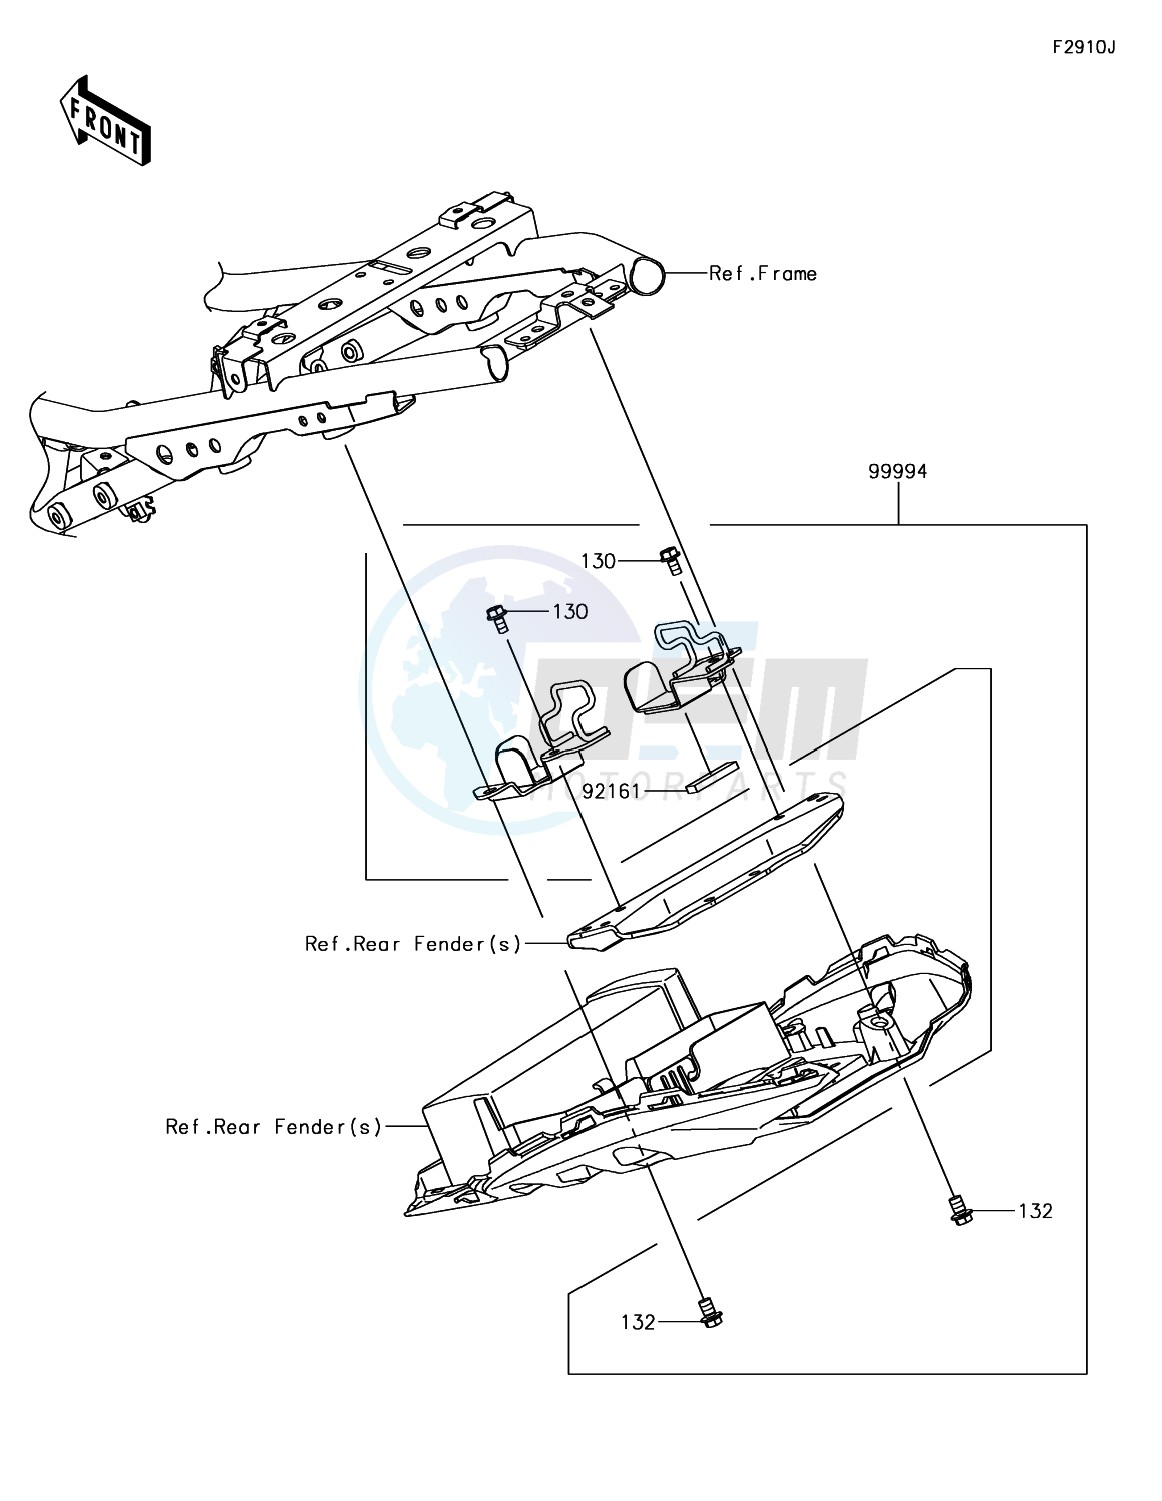 Accessory(U-Lock Bracket) blueprint